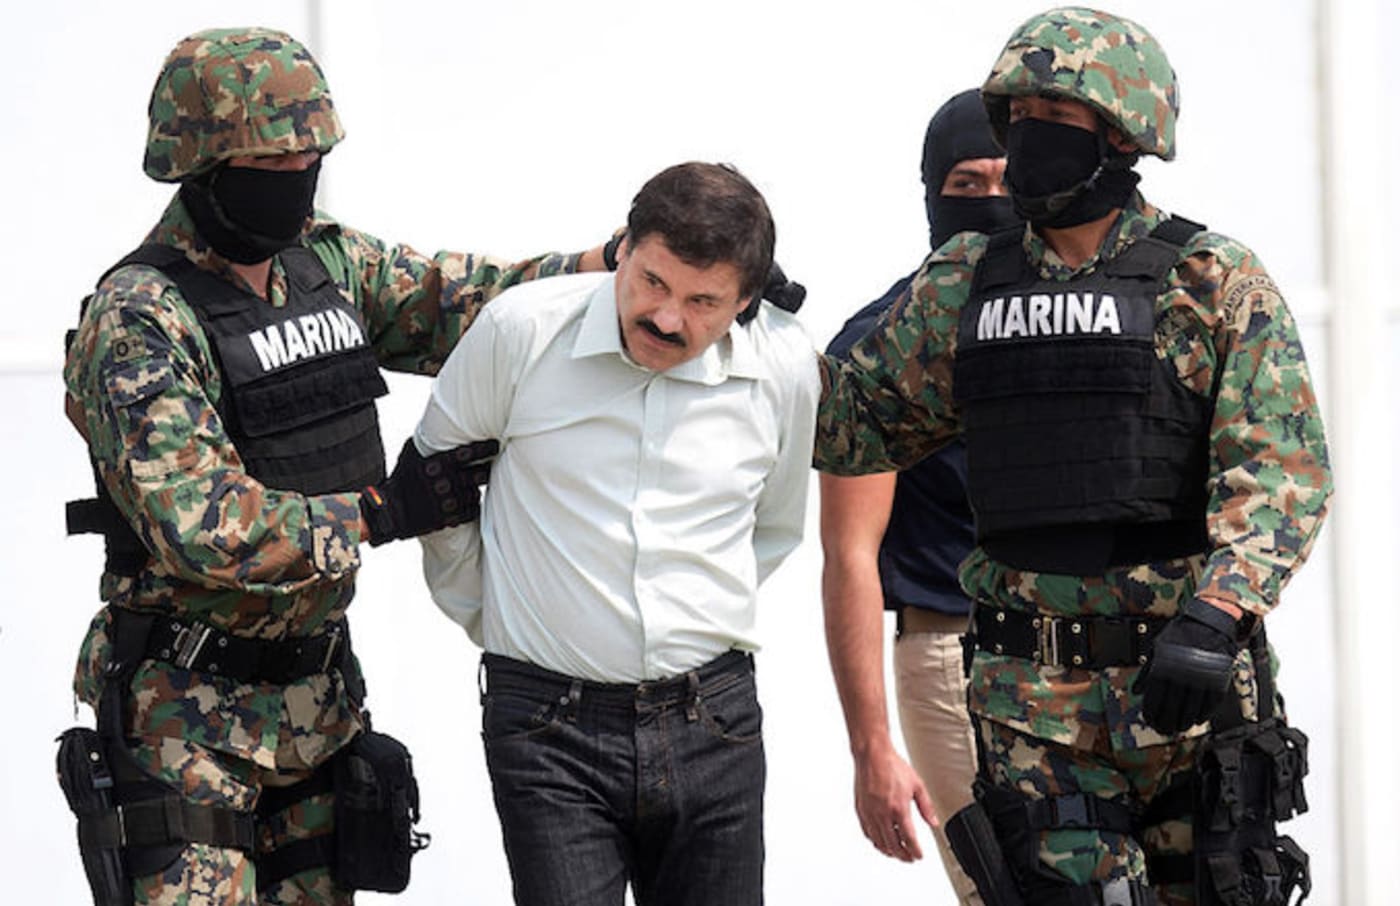 El Chapo Trial: Ex-Mistress Describes His Naked Escape 